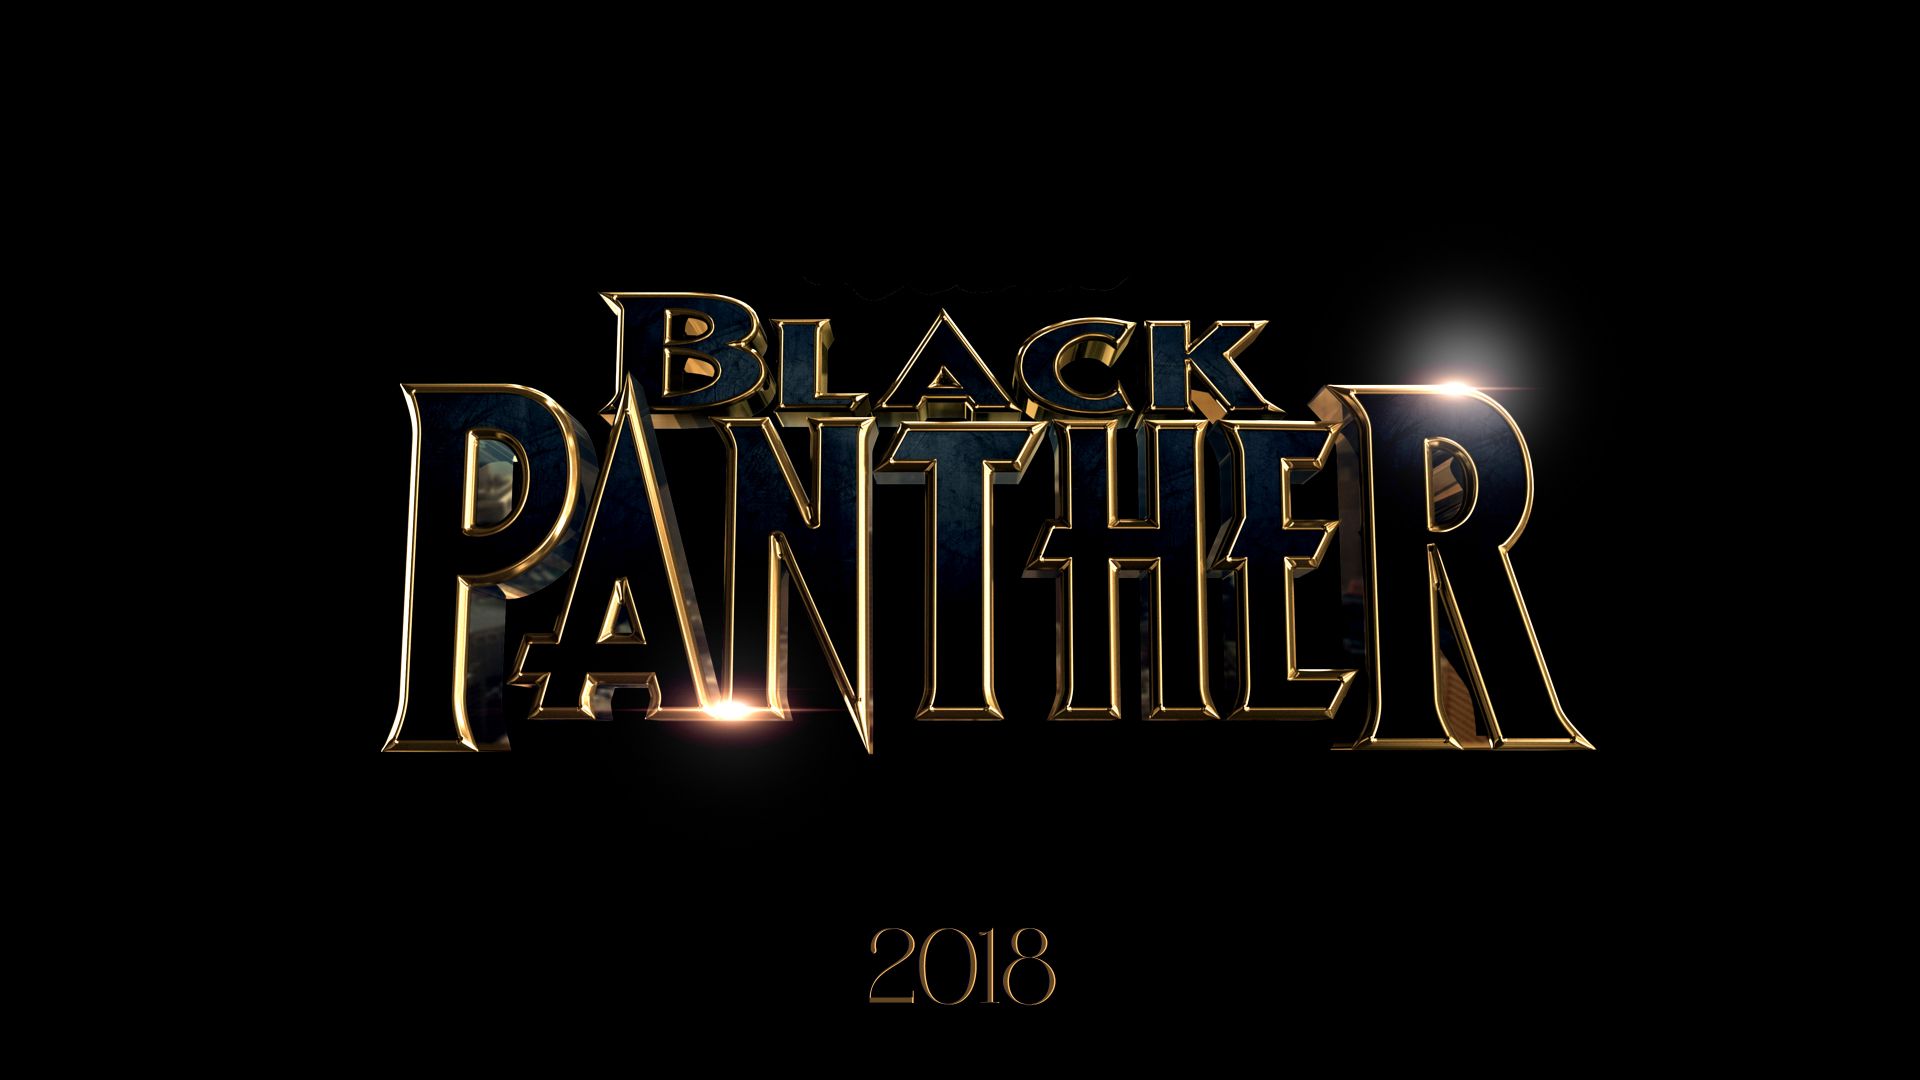 Черная пантера, Black Panther, 4k, 2018, poster (horizontal)